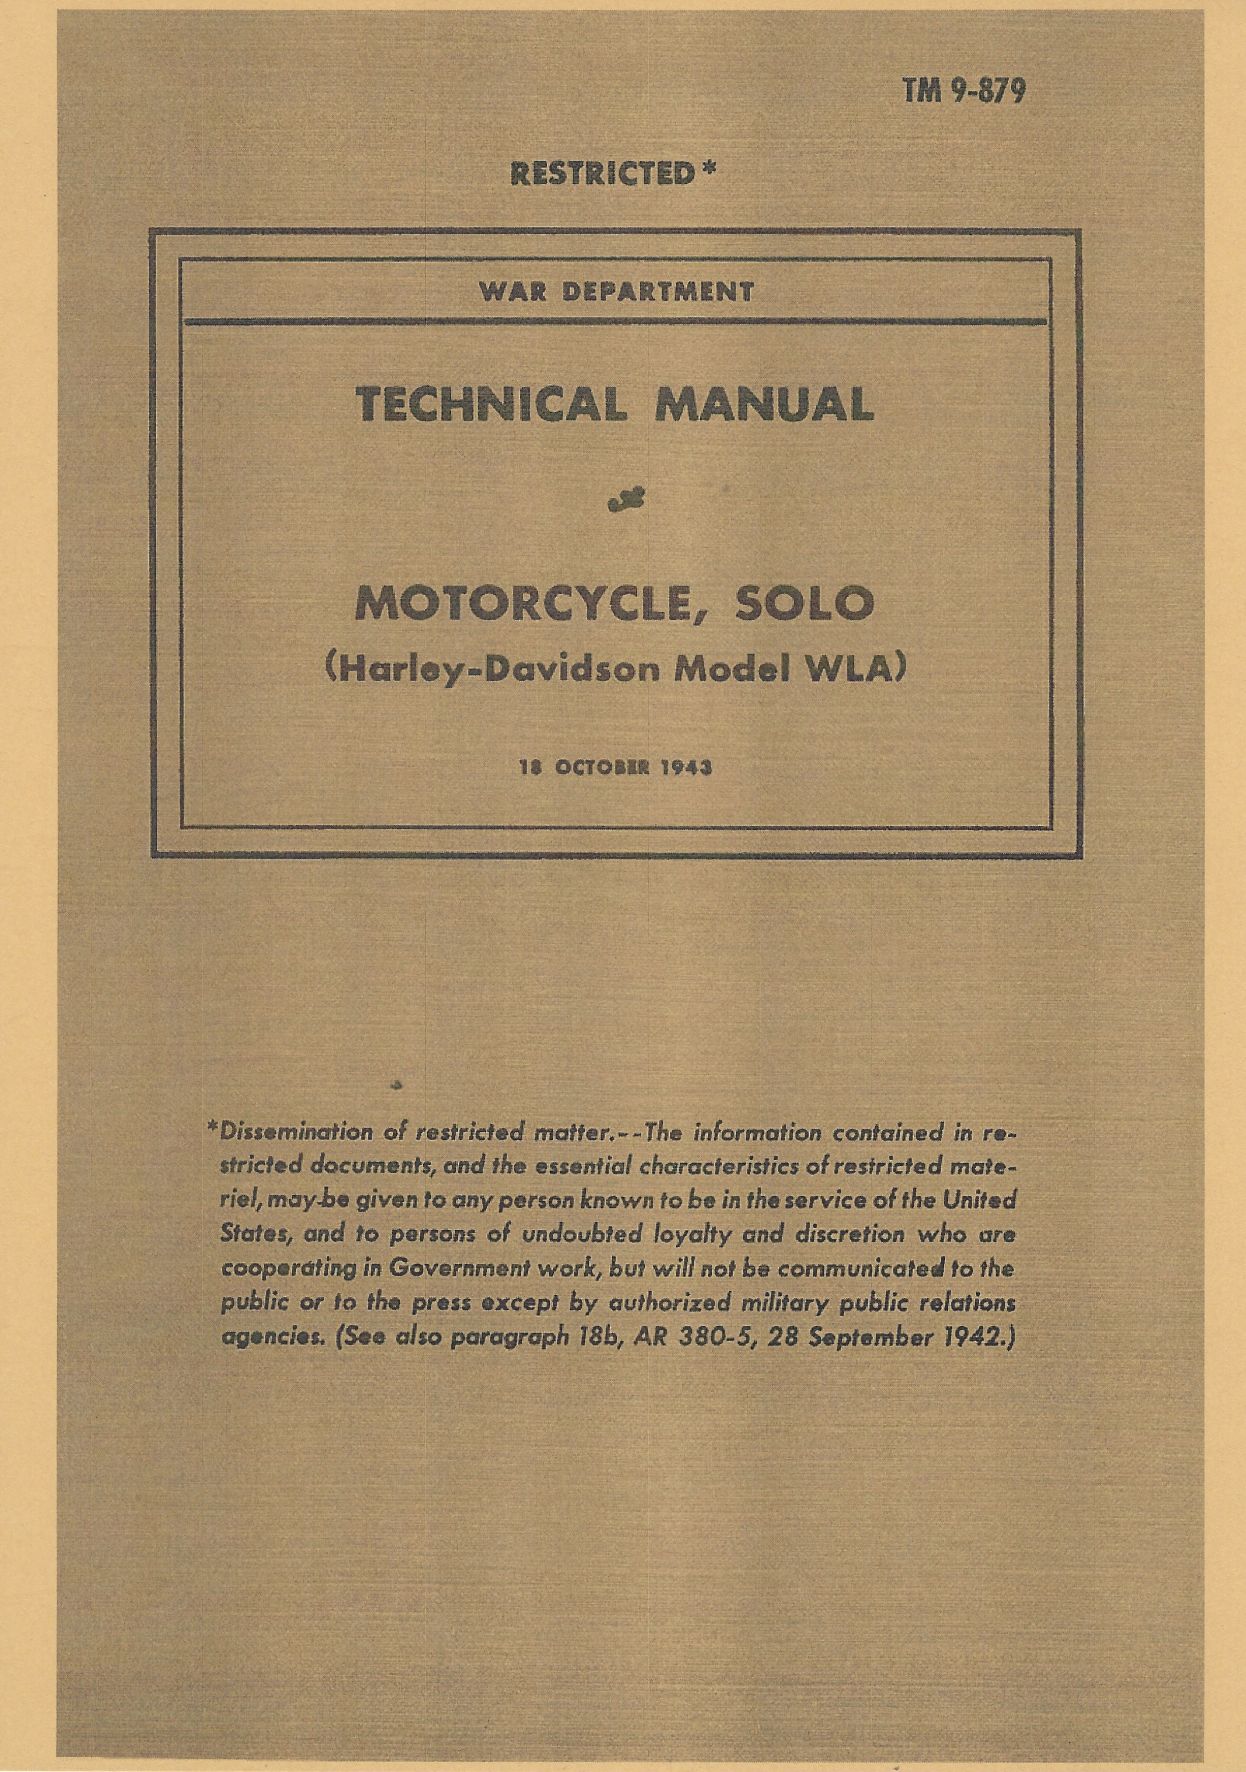 TM 9-879 US WAR DEPARTMENT TECHNICAL MANUAL MOTORCYCLE, SOLO (HARLEY-DAVIDSON MODEL WLA)